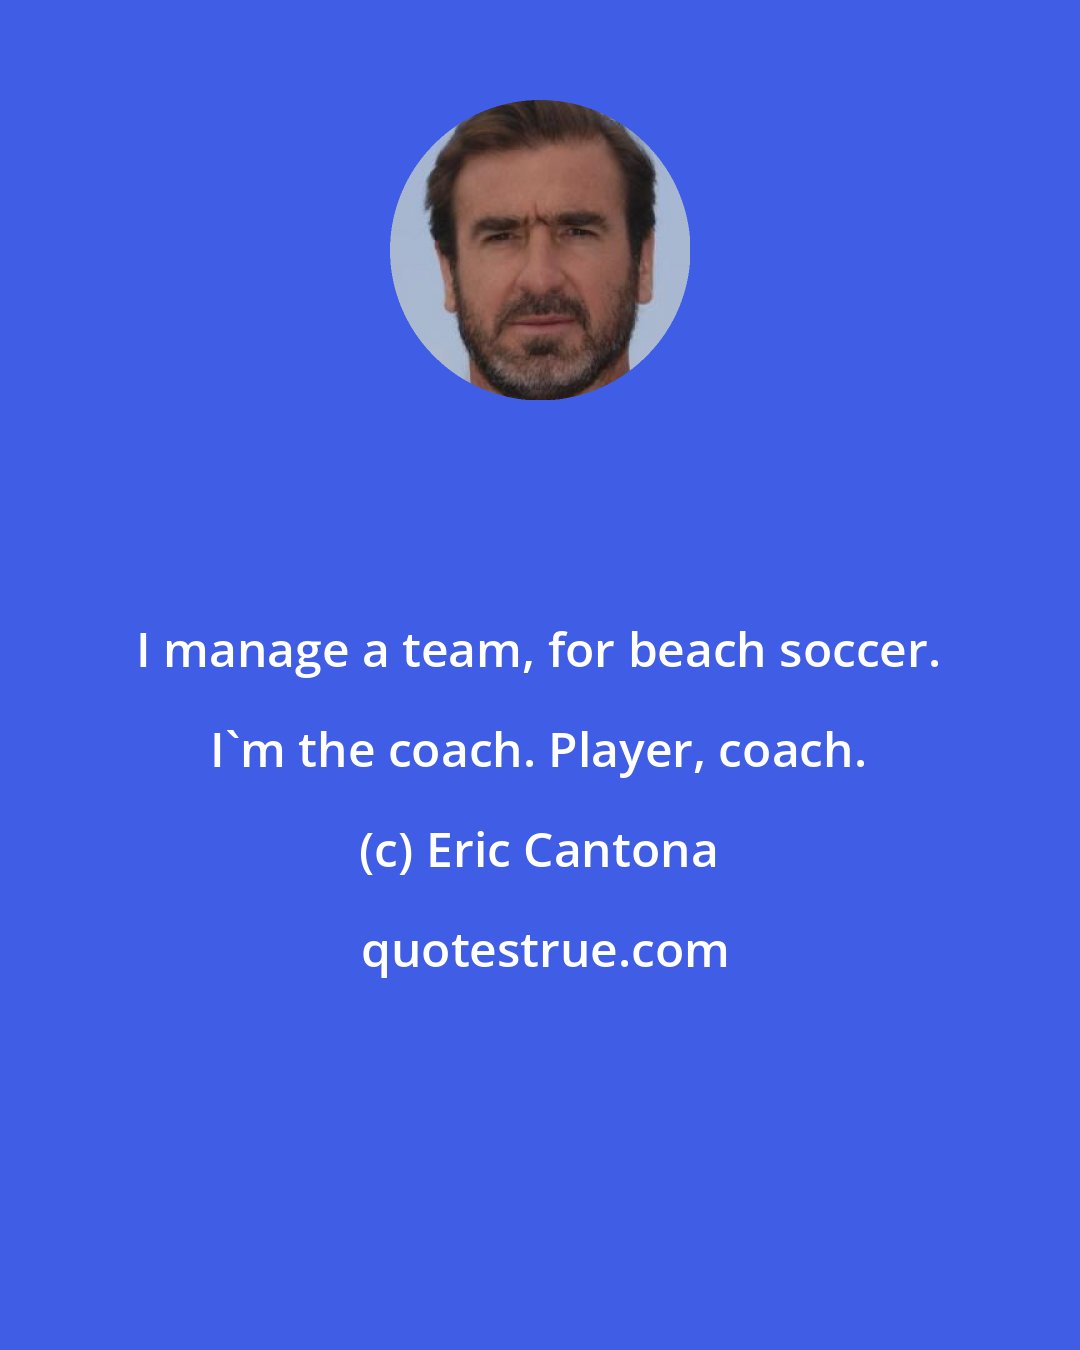 Eric Cantona: I manage a team, for beach soccer. I'm the coach. Player, coach.